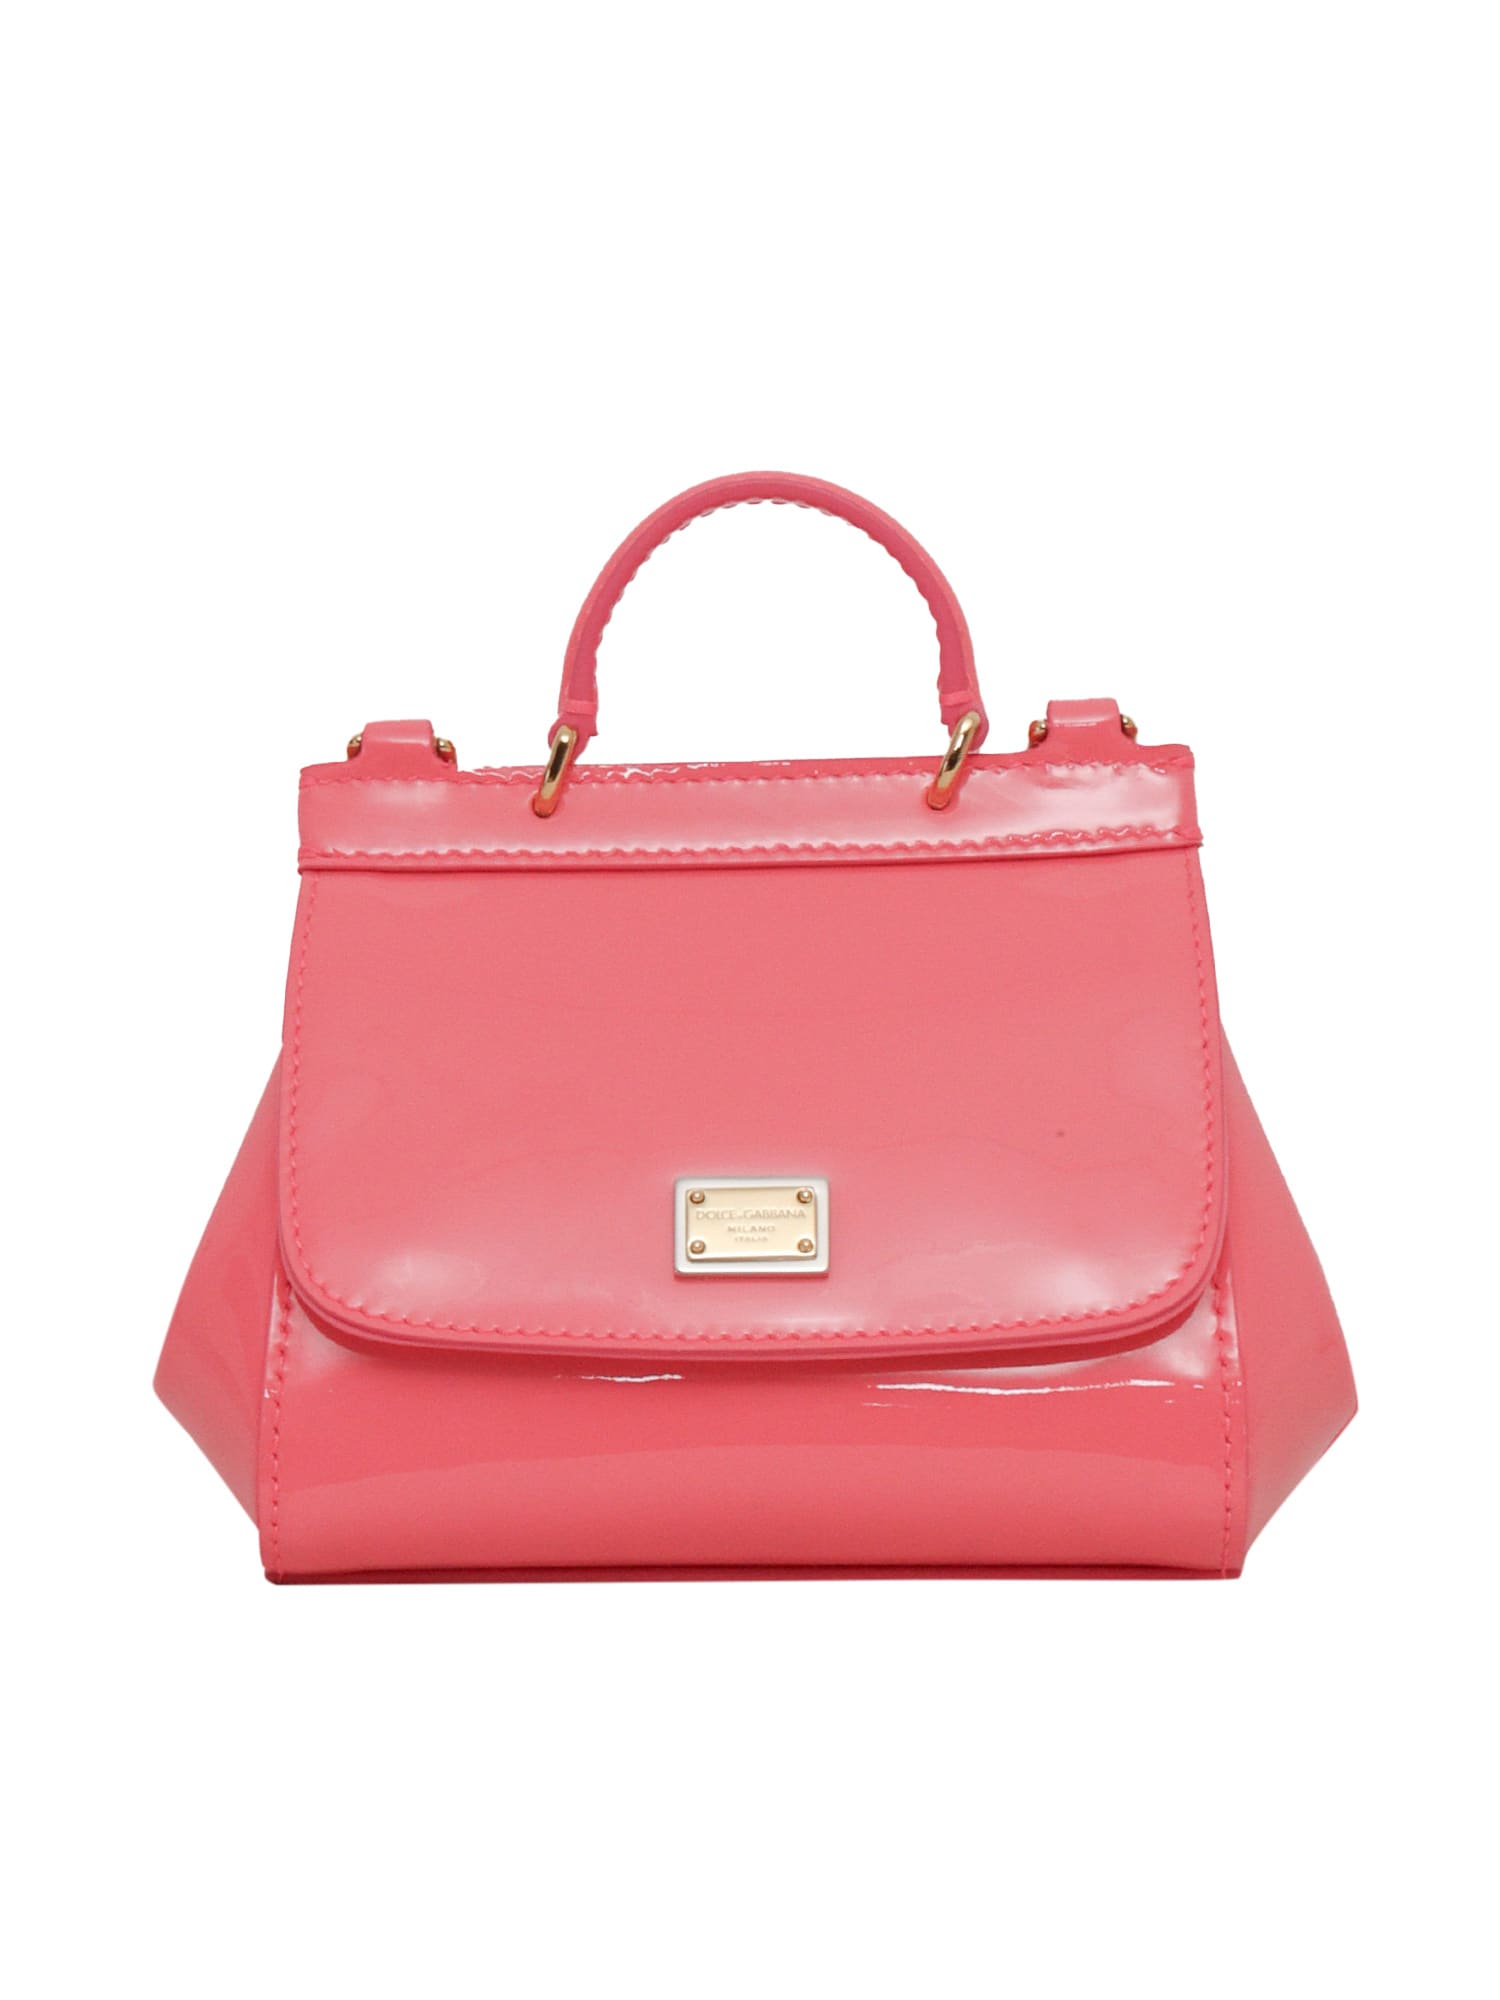 Dolce & Gabbana Pink D & g Leather Bag